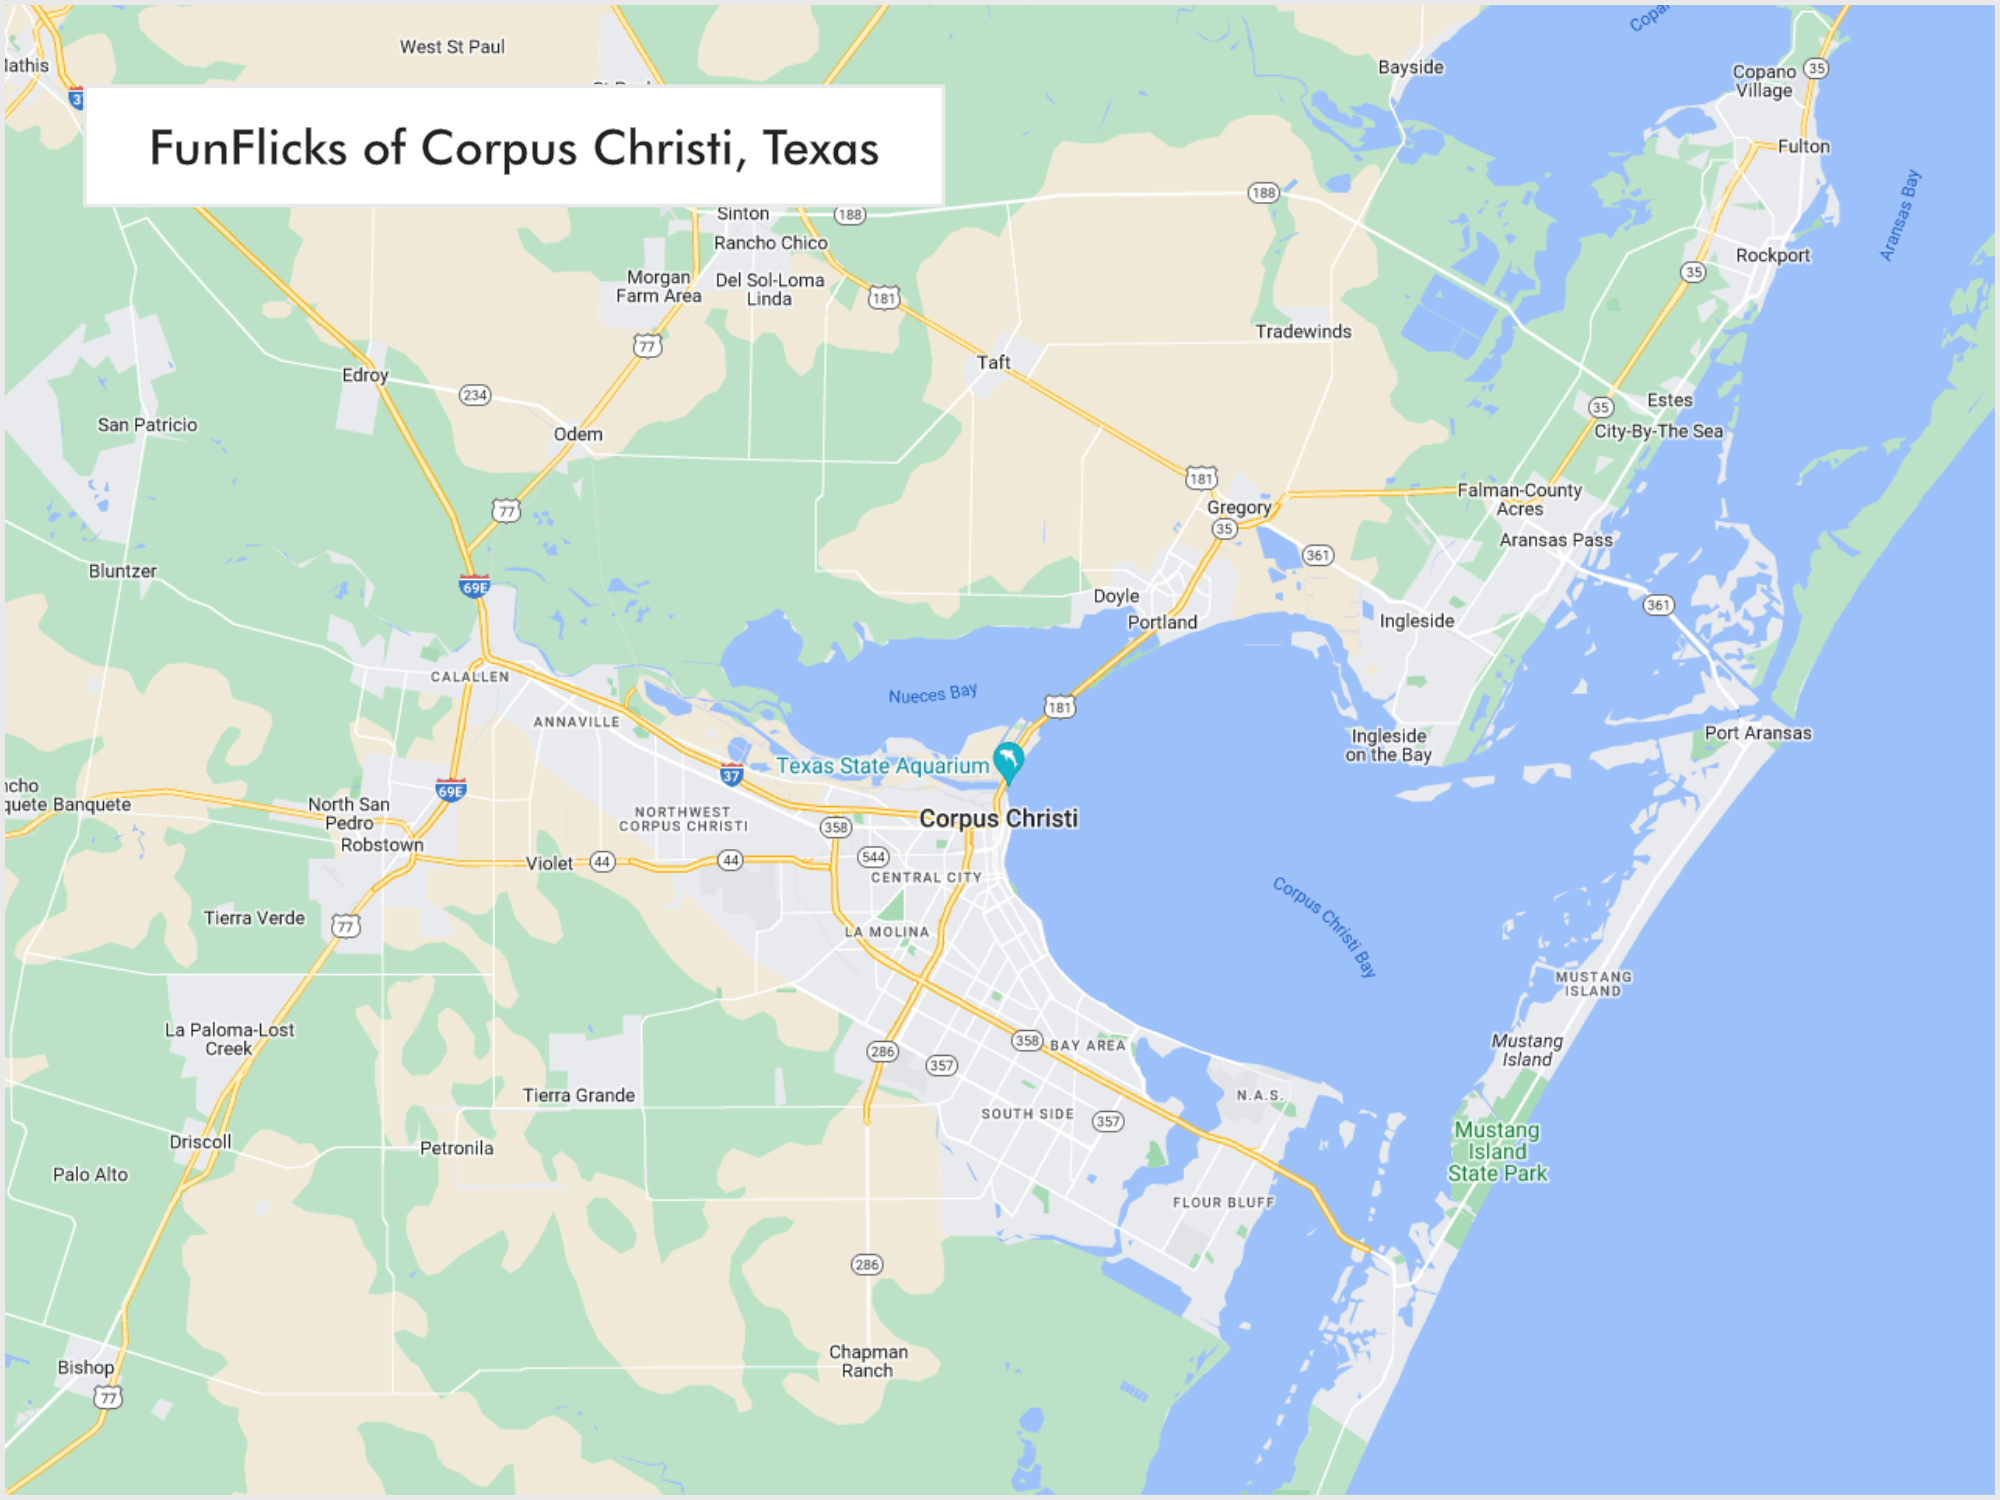 FunFlicks® Corpus Christi territory map